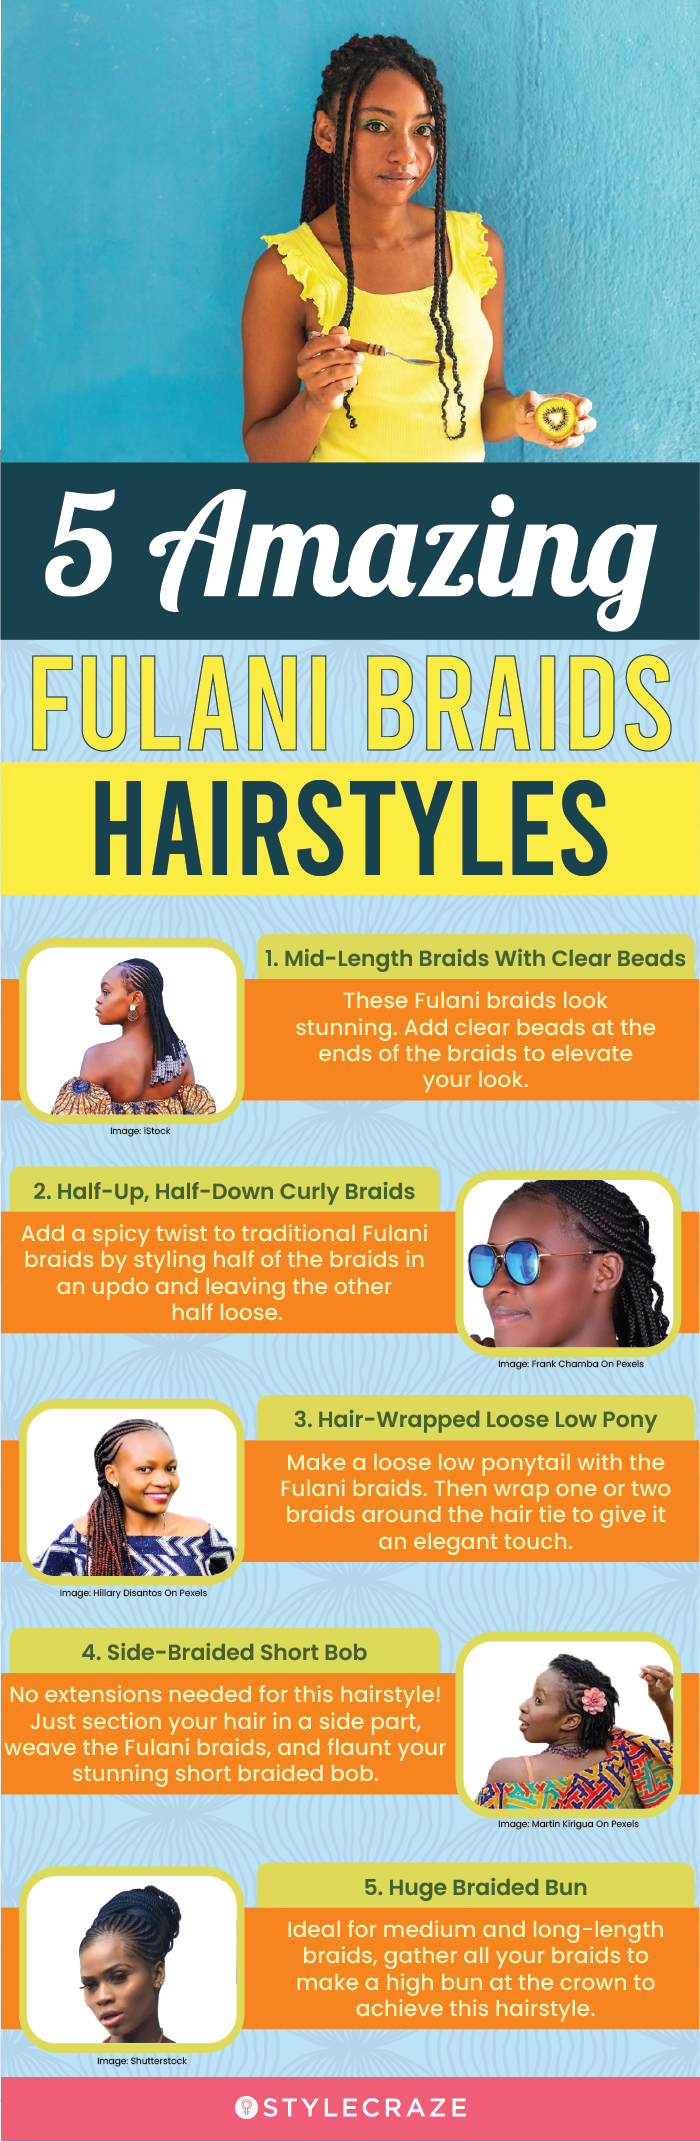 5 amazing fulani braids hairstyles (infographic)